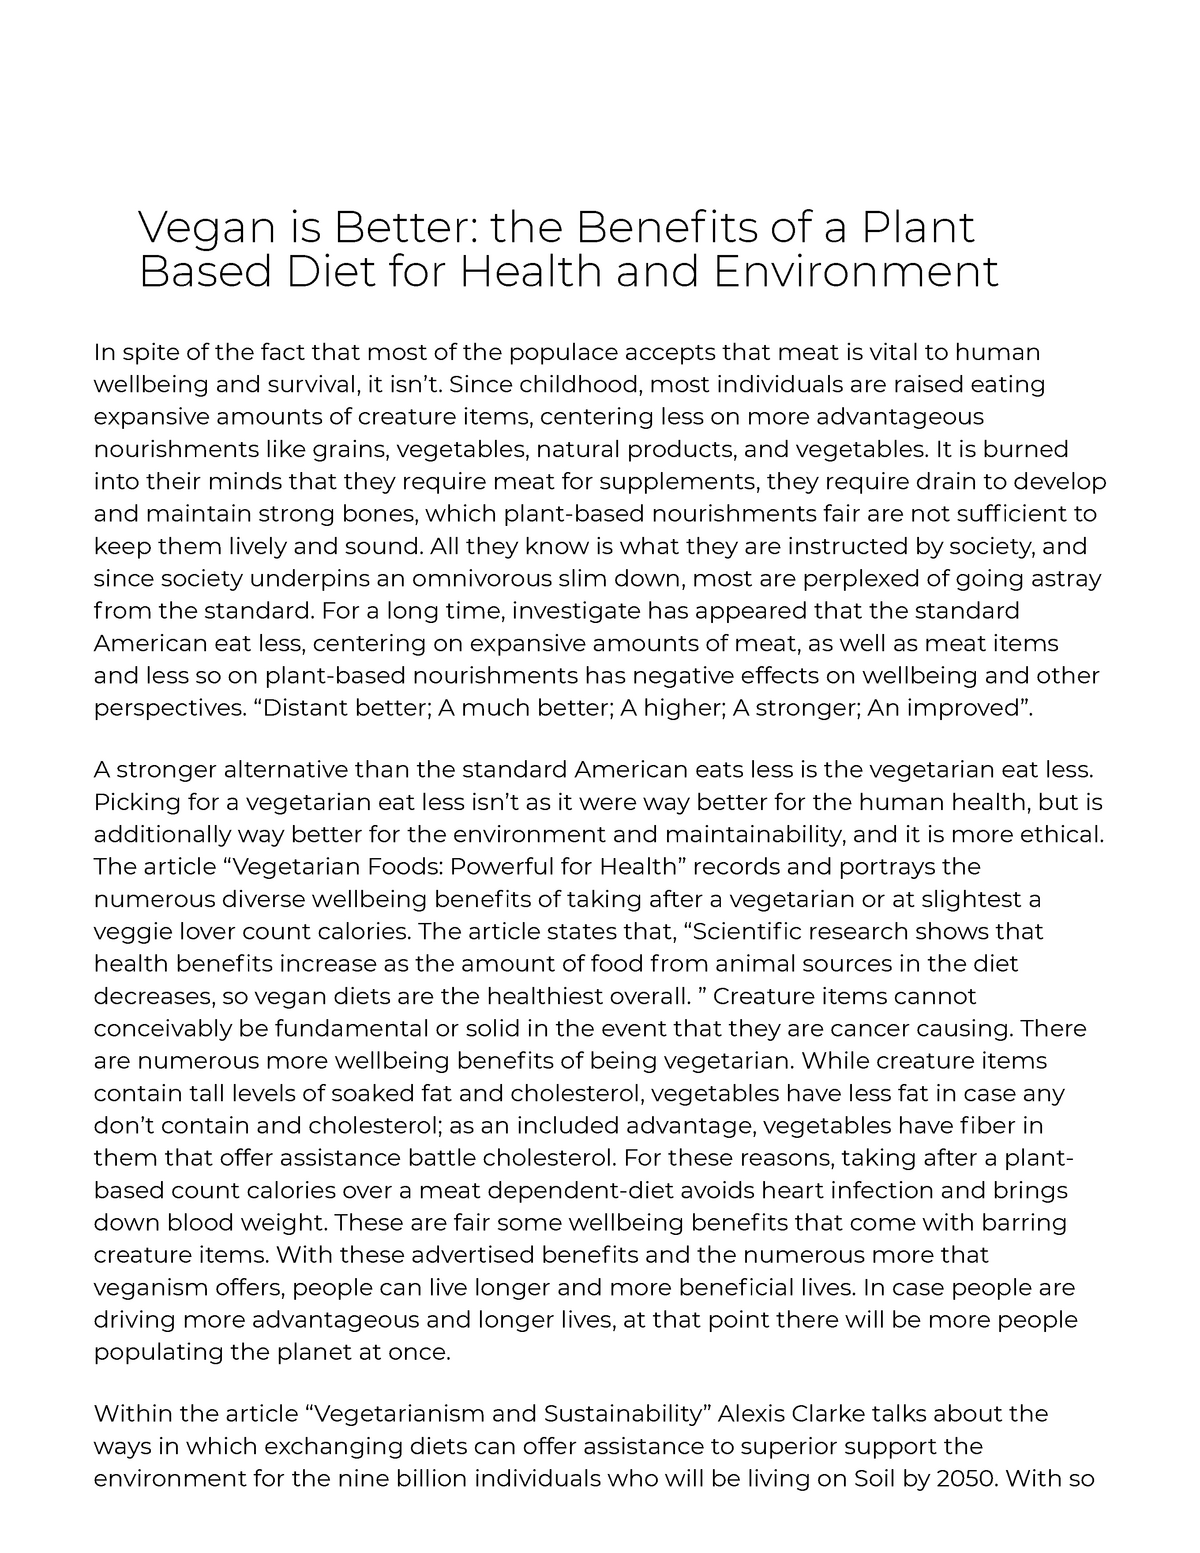 essay about vegan lifestyle